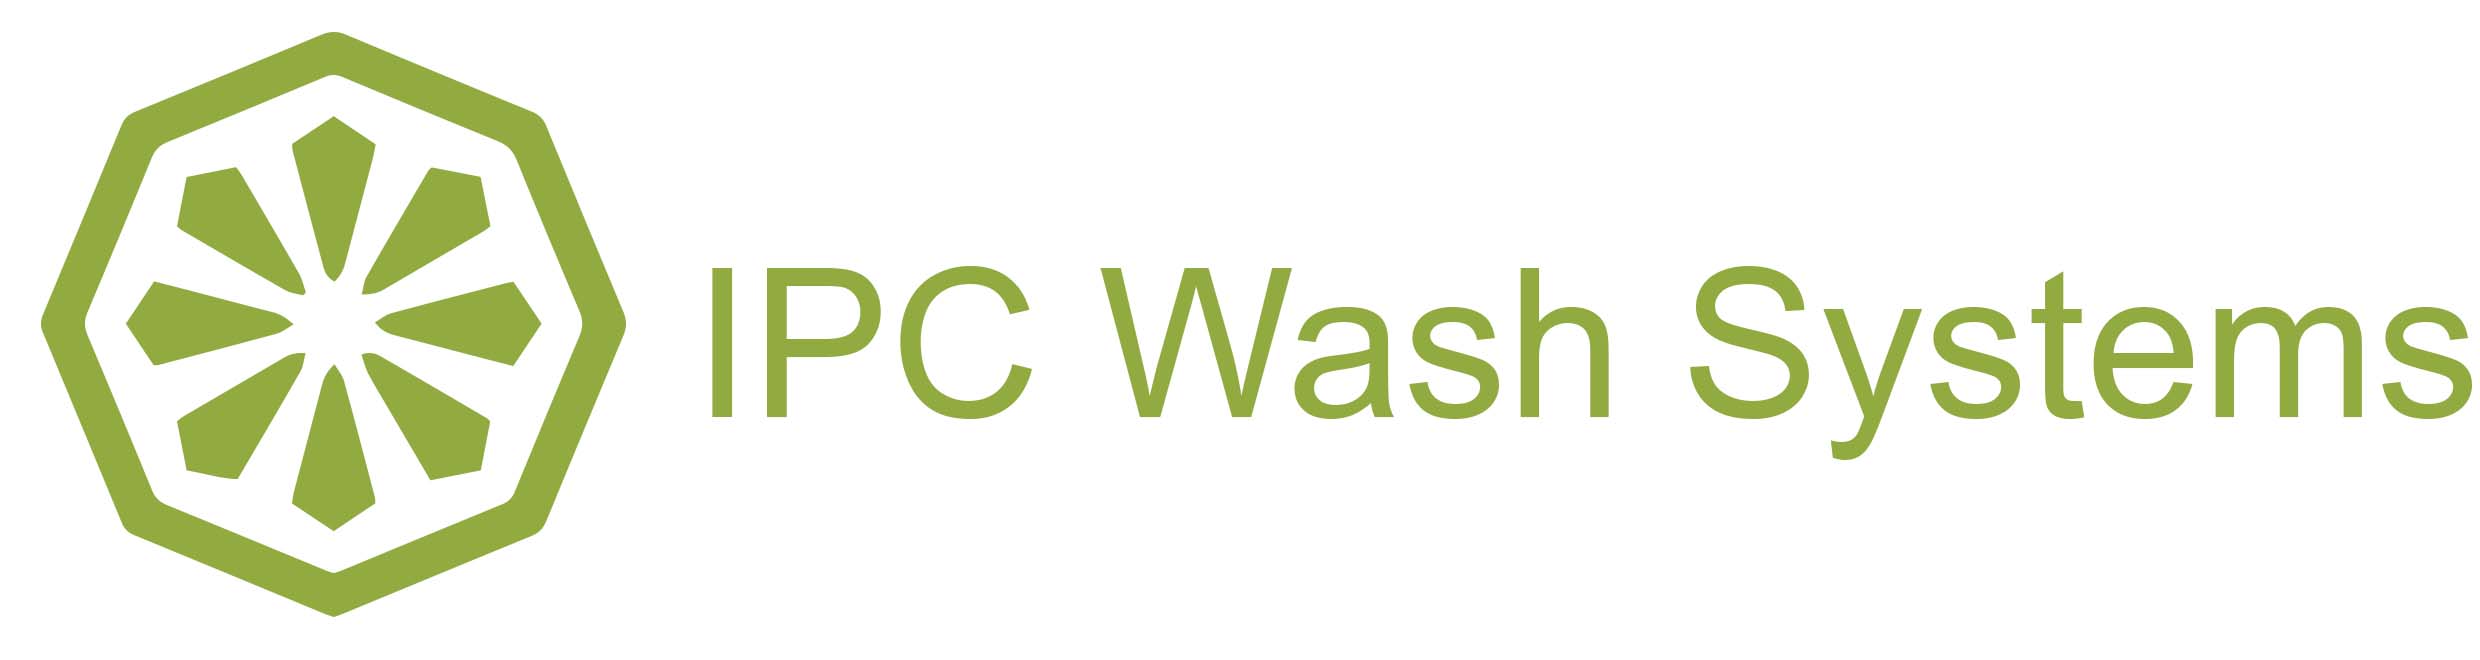 Ipc Wash Systems